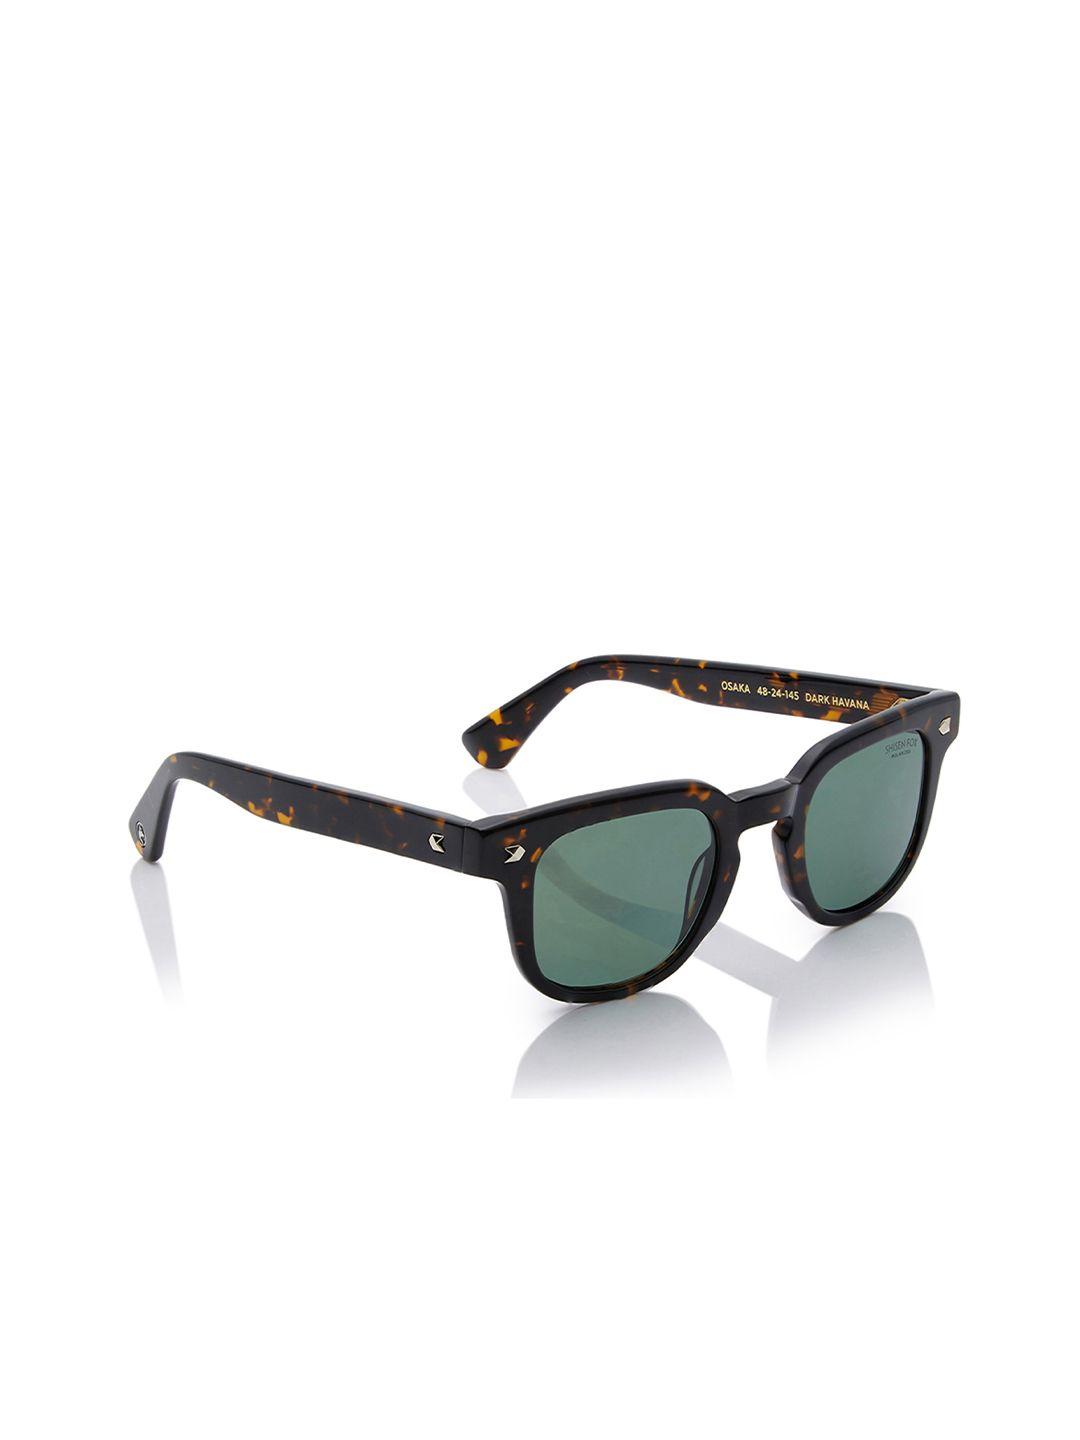 shisen fox osaka dark havana + polarized unisex square sunglasses with uv protected lens